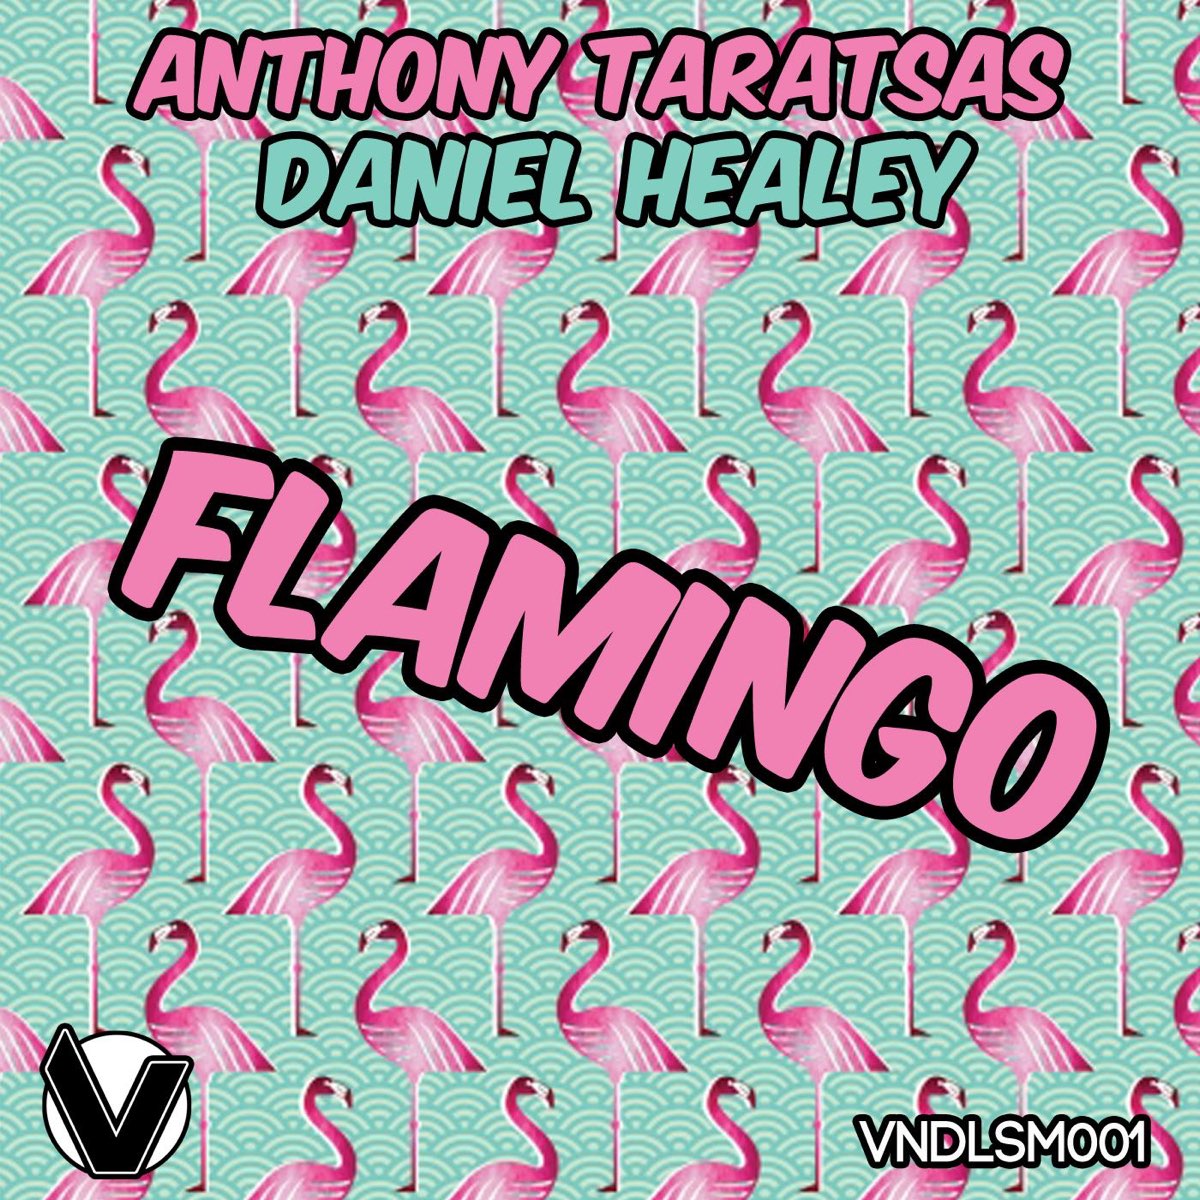 Слушать песню фламинго